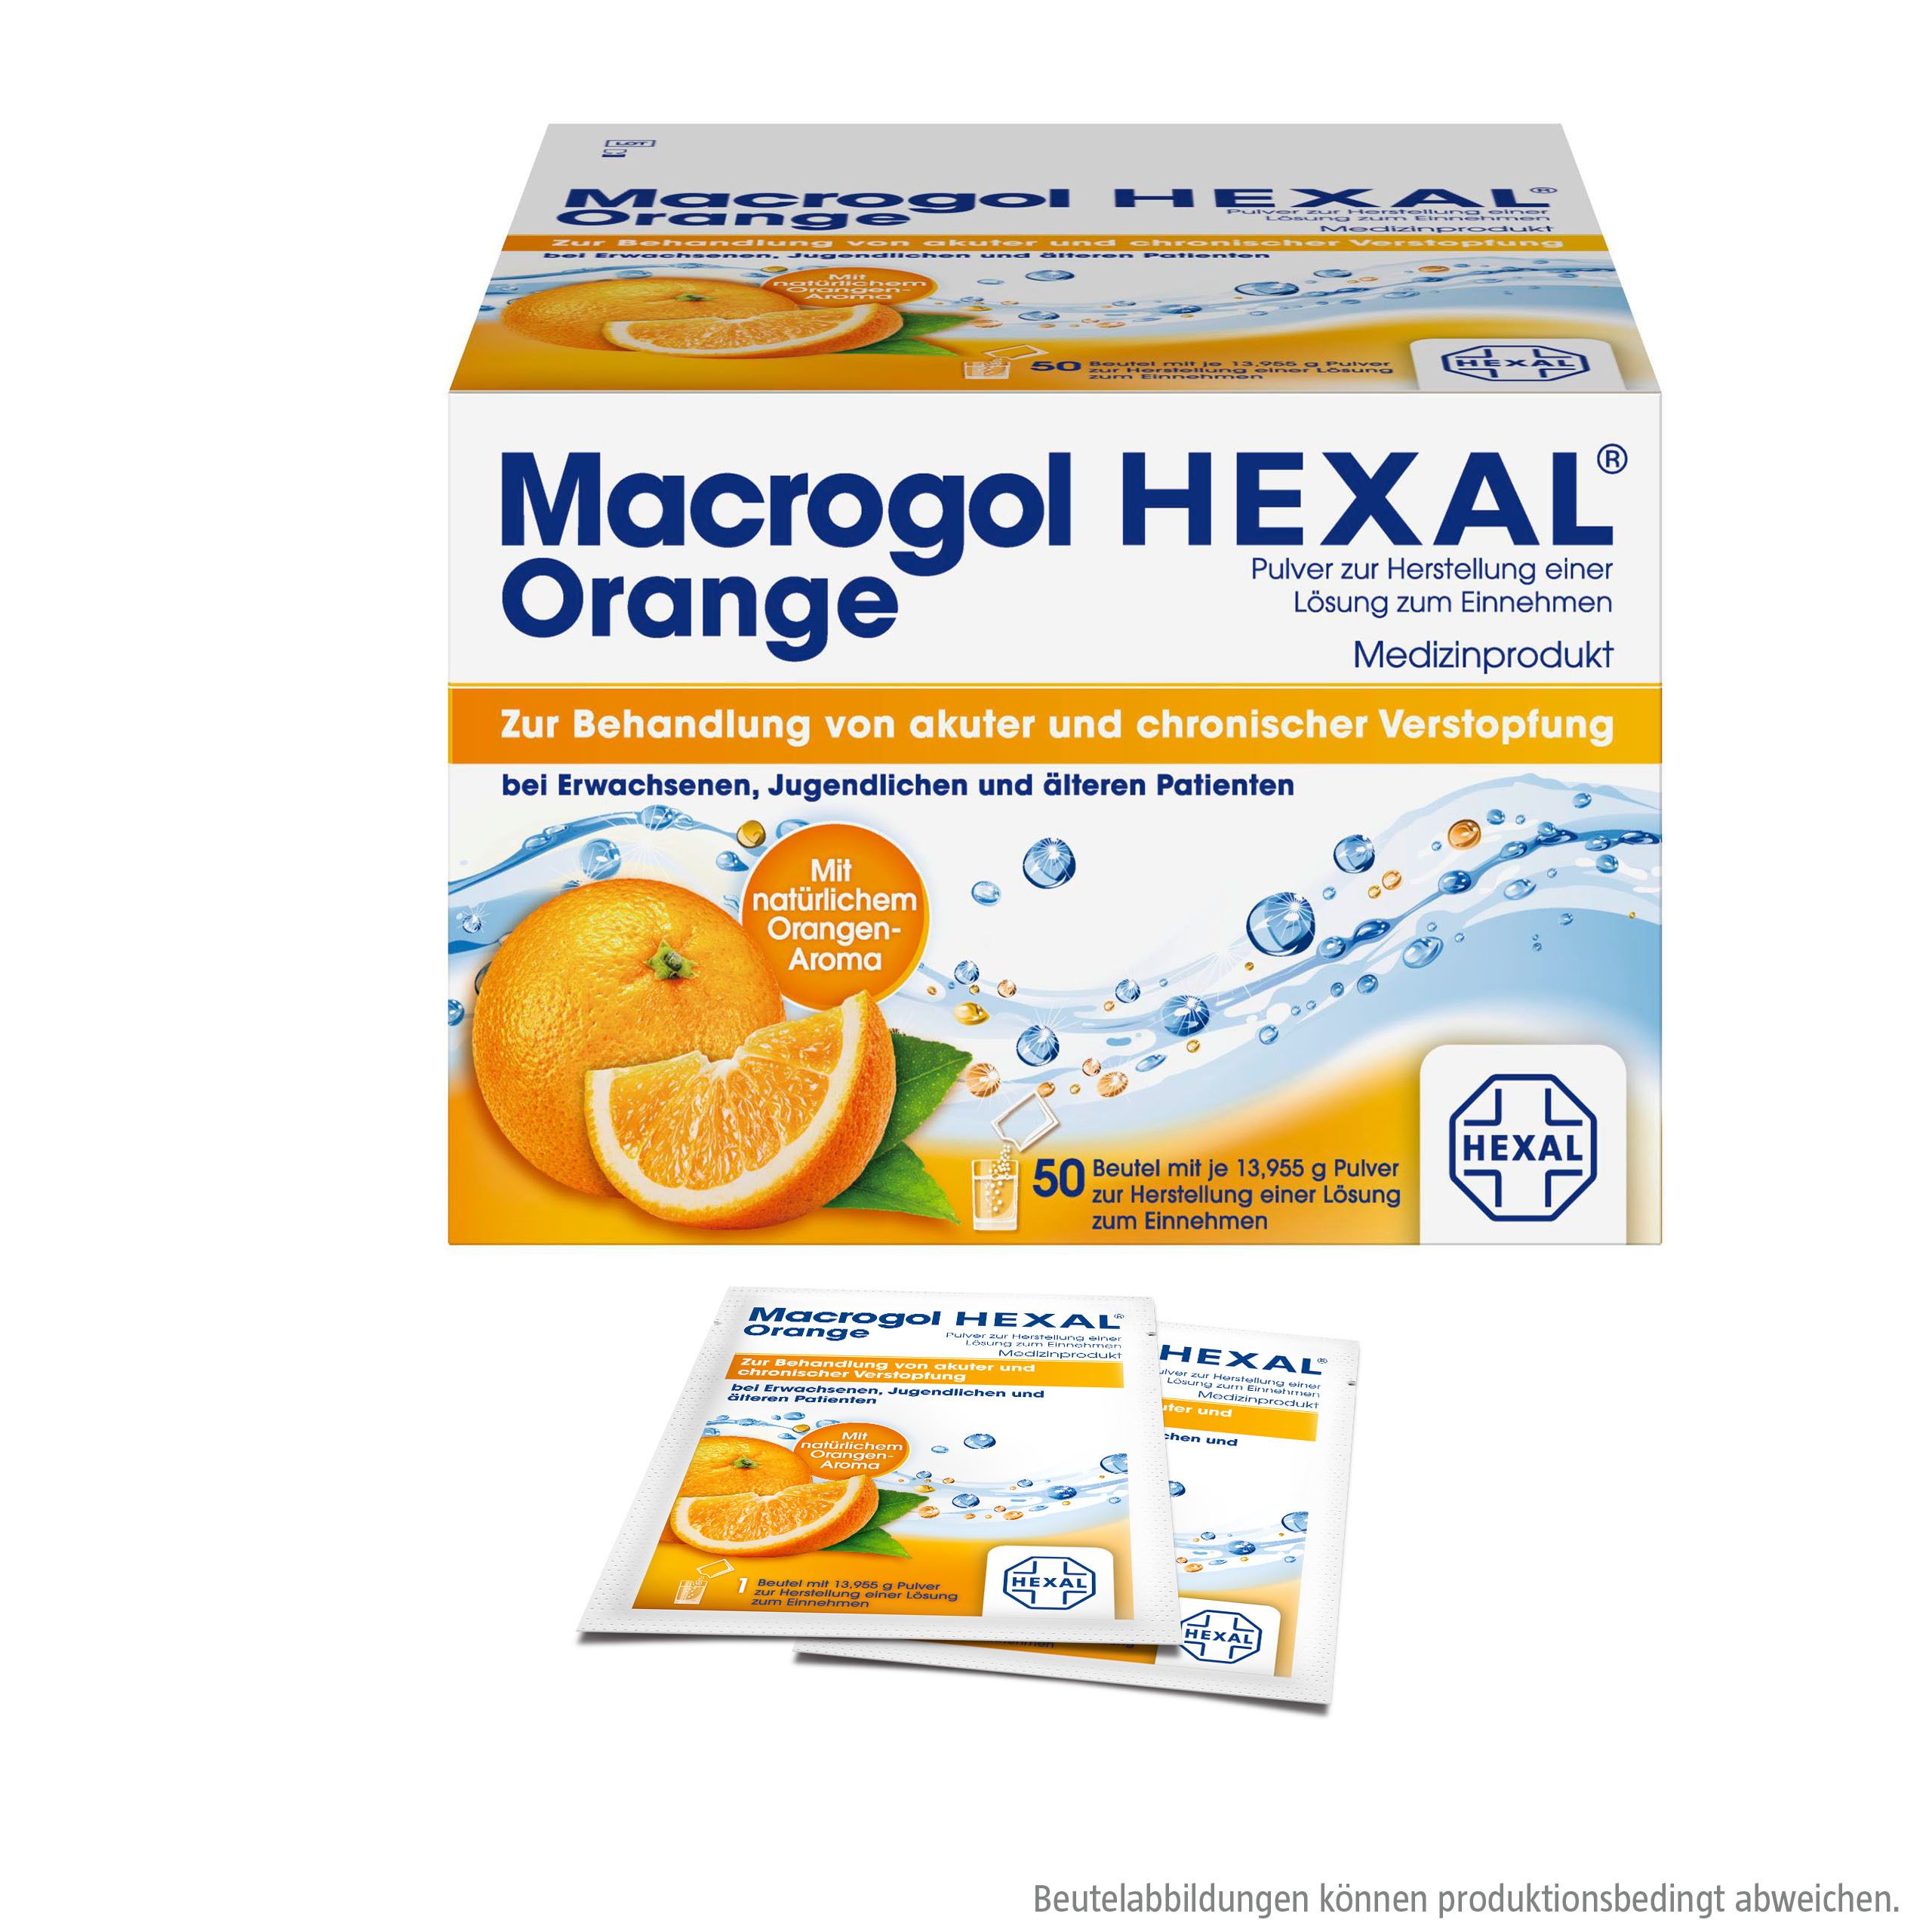 Macrogol HEXAL® Orange